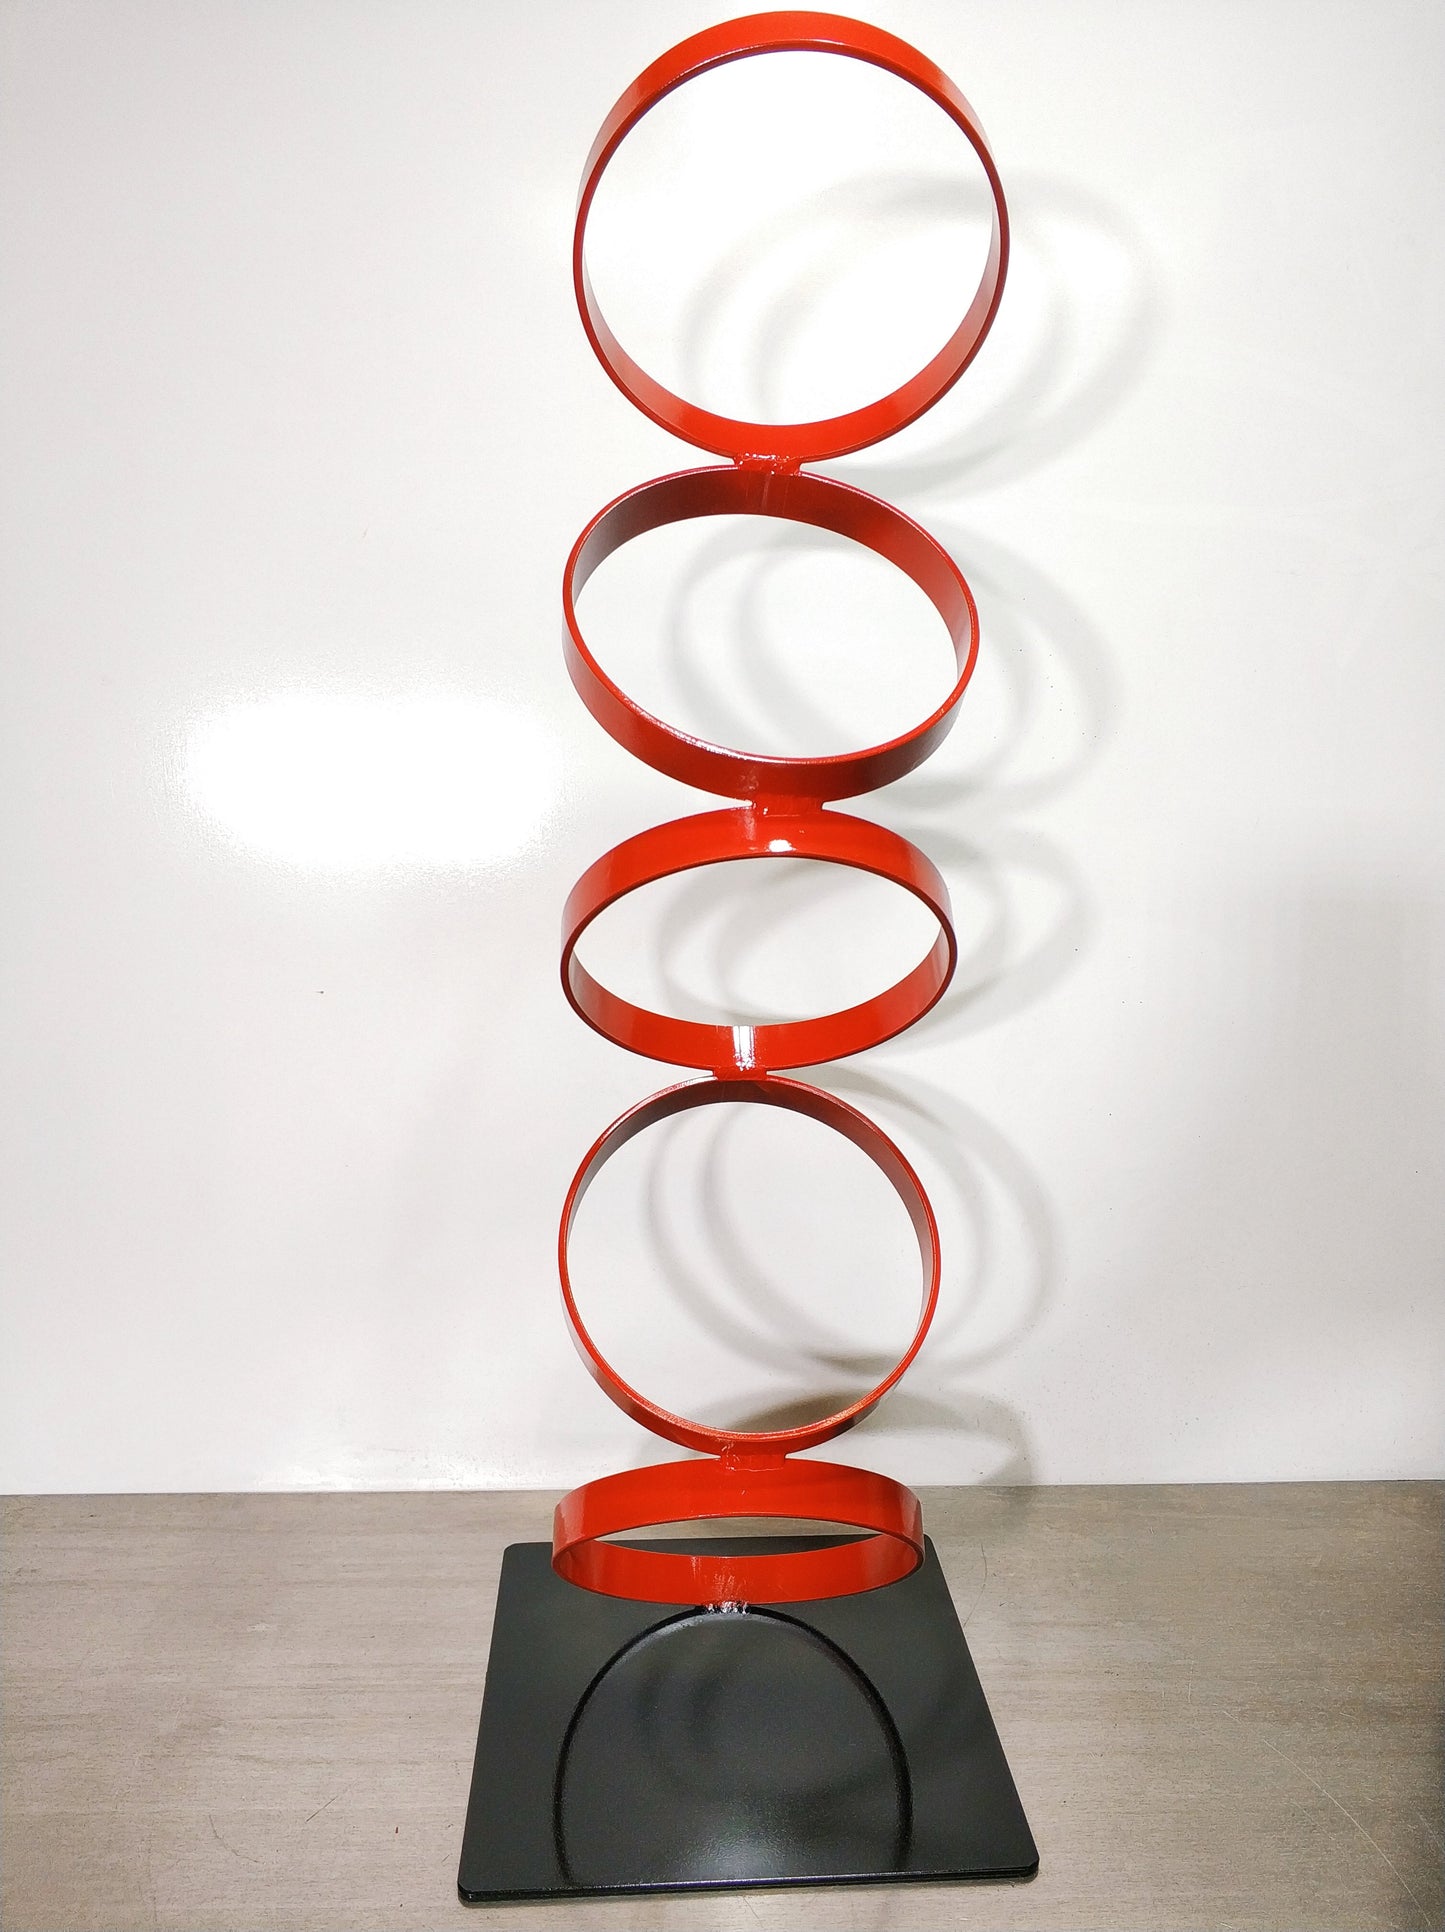 5 Ring RED sculpture sculpture Mid Century Modern Metal Sculpture Art Abstract Simple Contemporary Decor Modernist by WALTER METAL ART